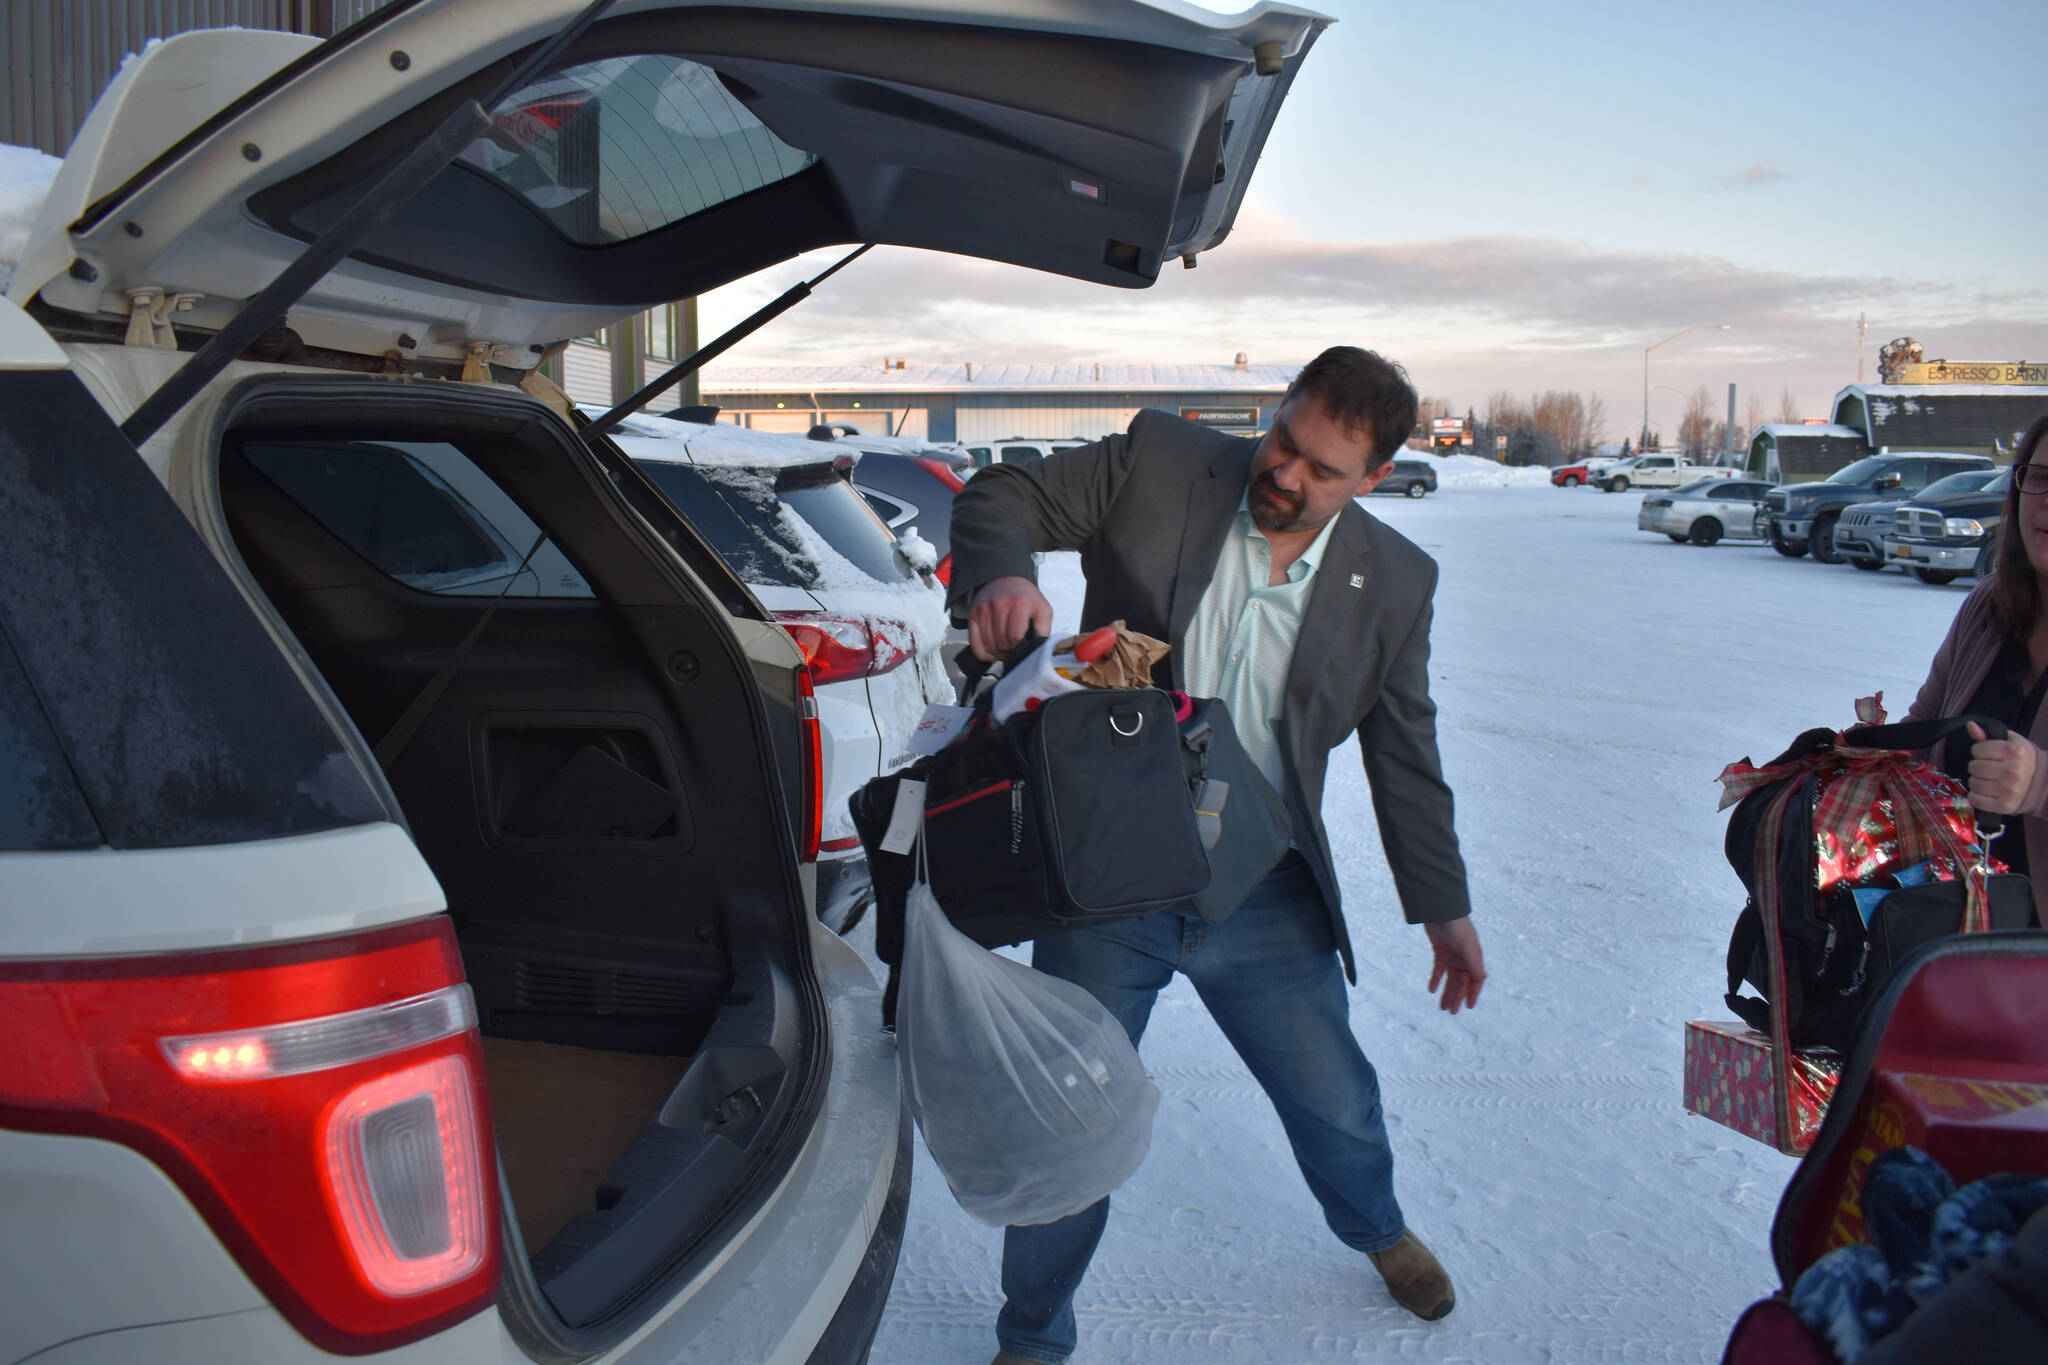 Robert Winter loads duffel bags into a car, part of a donation by the Kenai Peninsula Association of Realtors to the Kenai Peninsula Borough School District’s Students in Transition Program on Thursday, Dec. 8, 2022, at Kenai Catering in Kenai, Alaska. (Jake Dye/Peninsula Clarion)